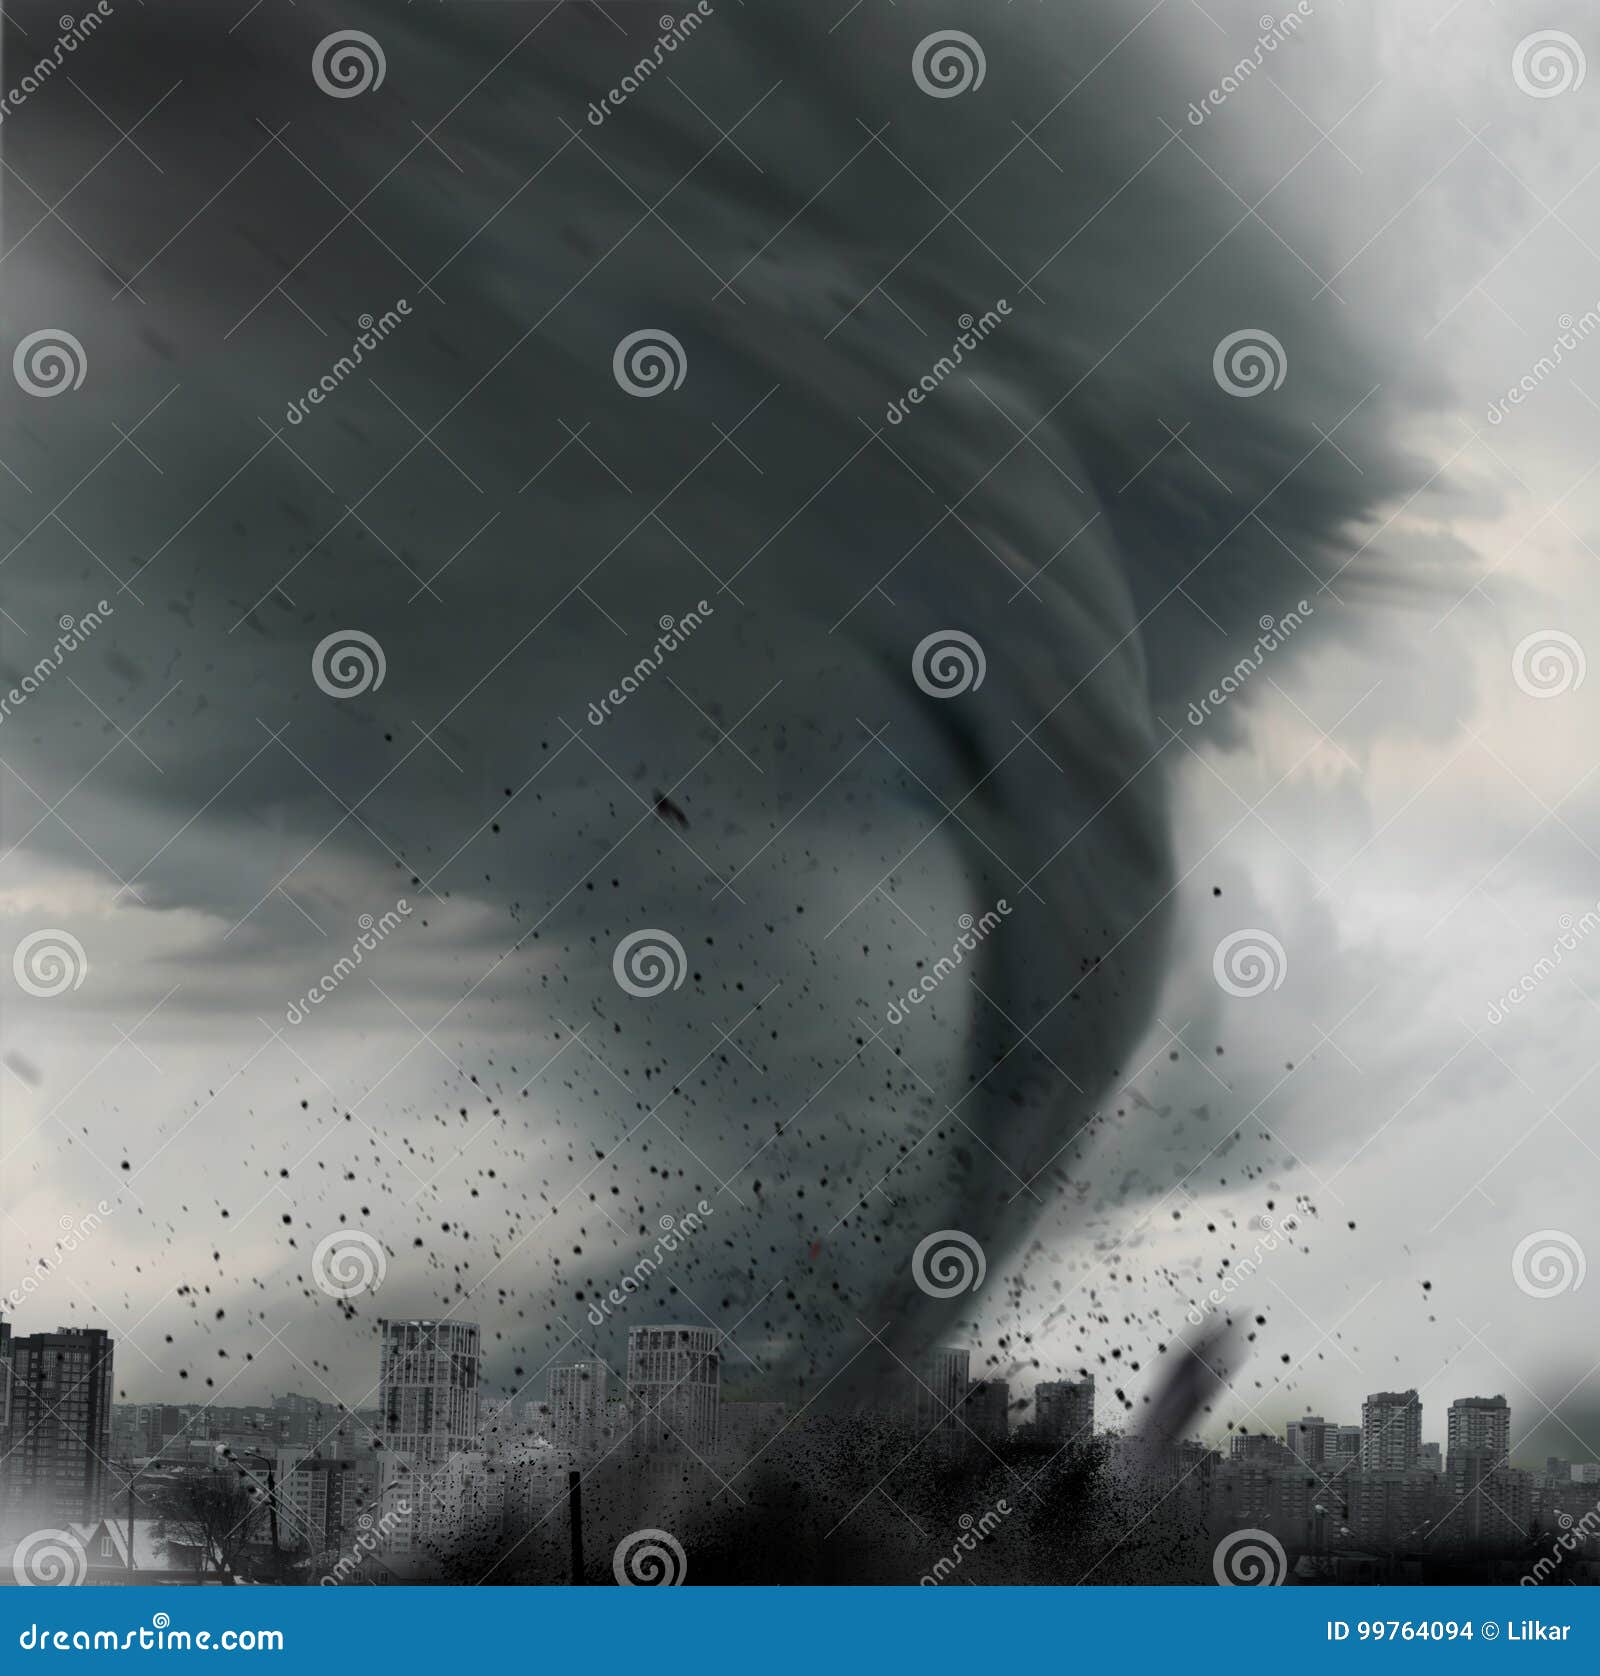 tornado twisting above city